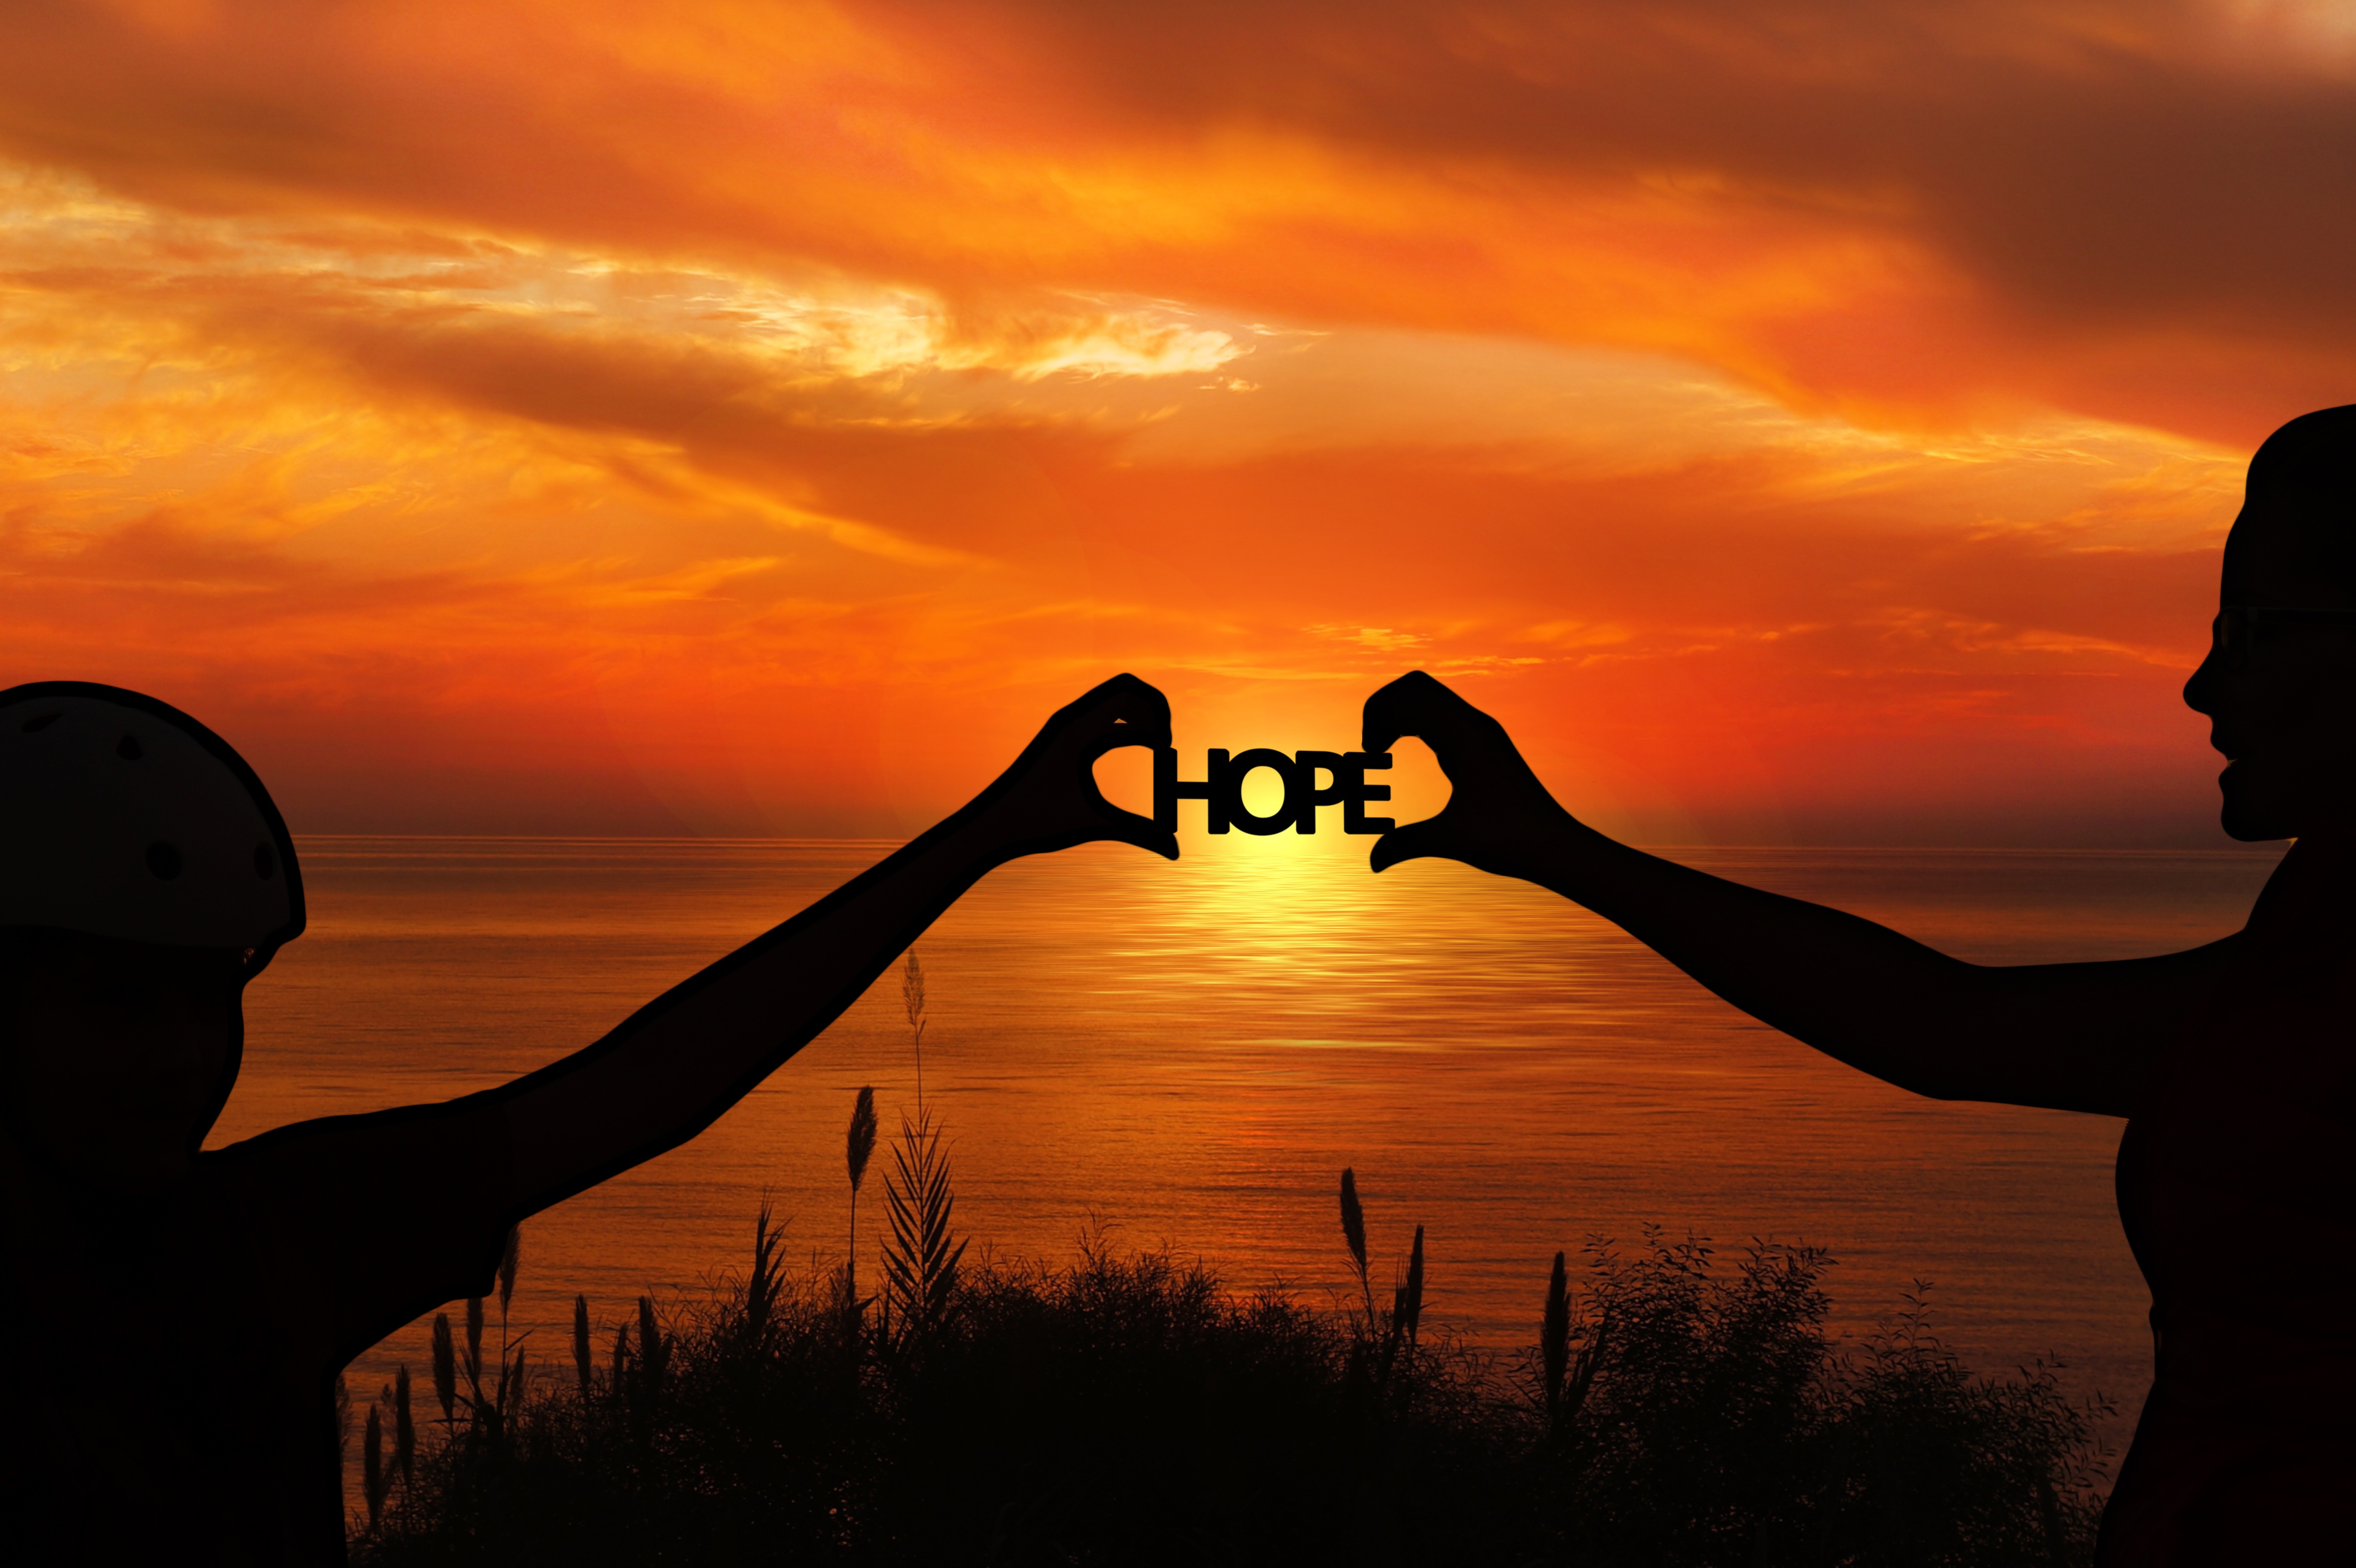 motivation, hope, silhouettes, hands, words, sunset, horizon 2160p